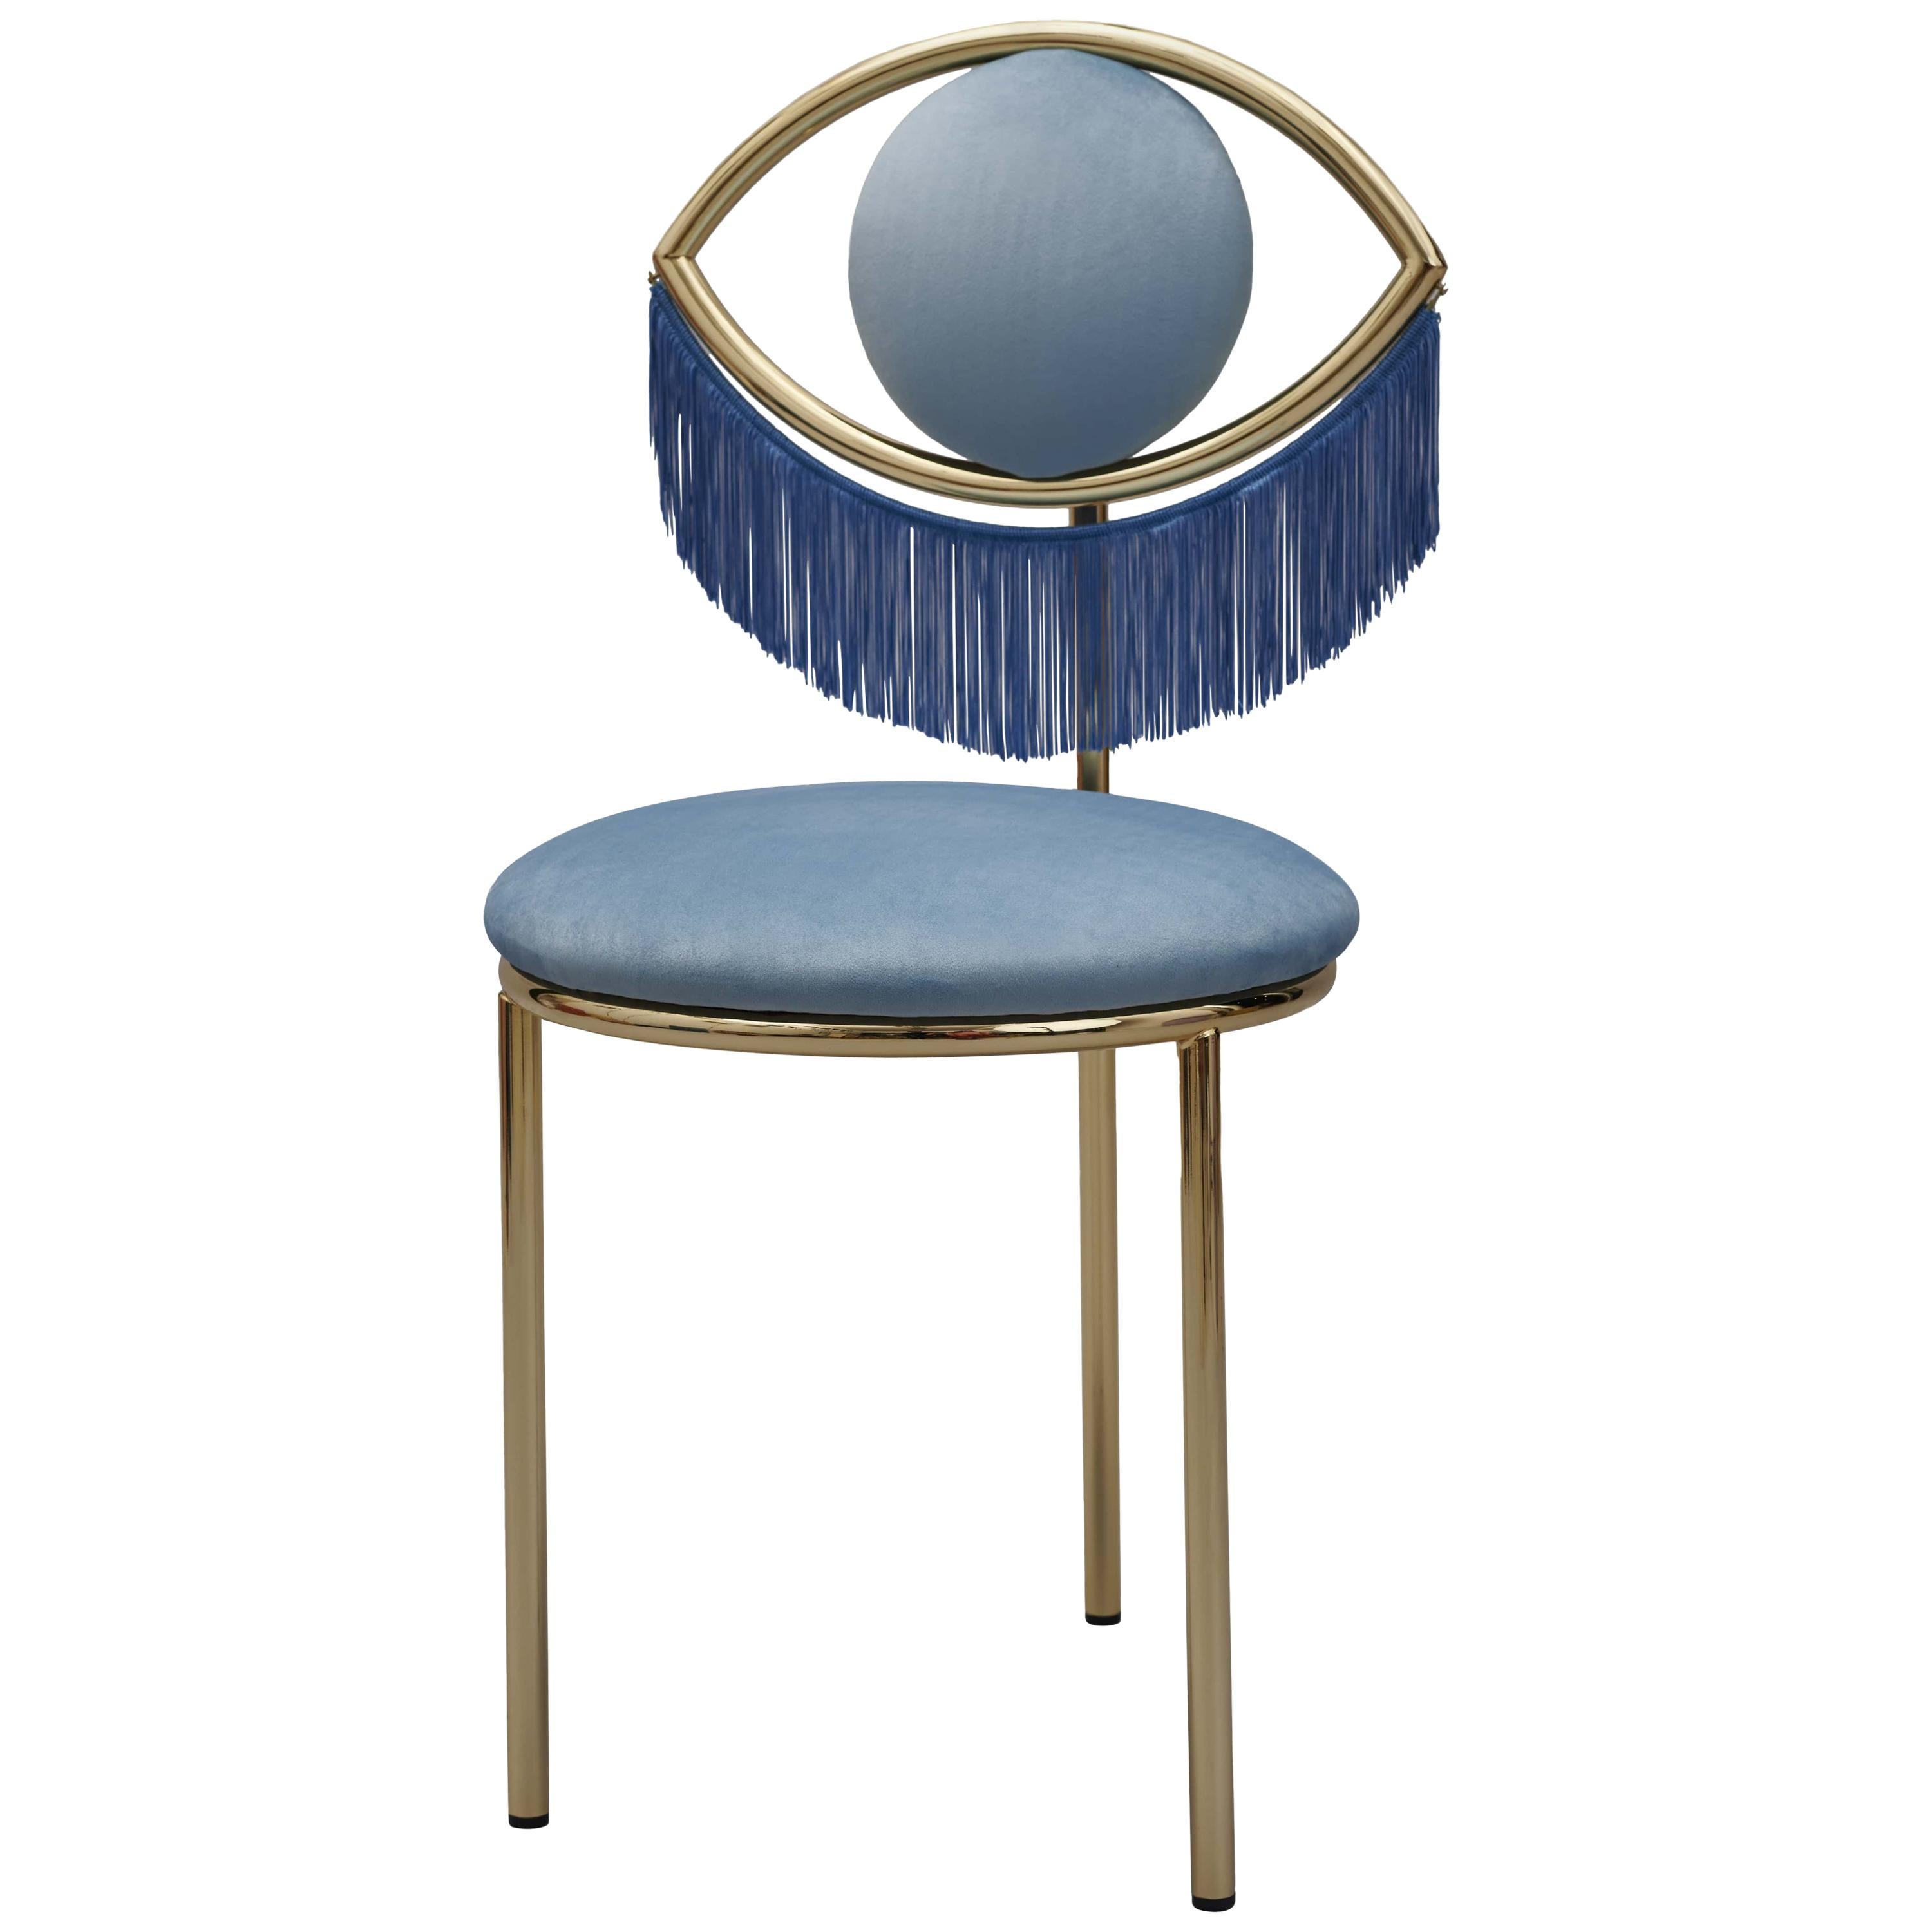 Wink Chair by Masquespacio